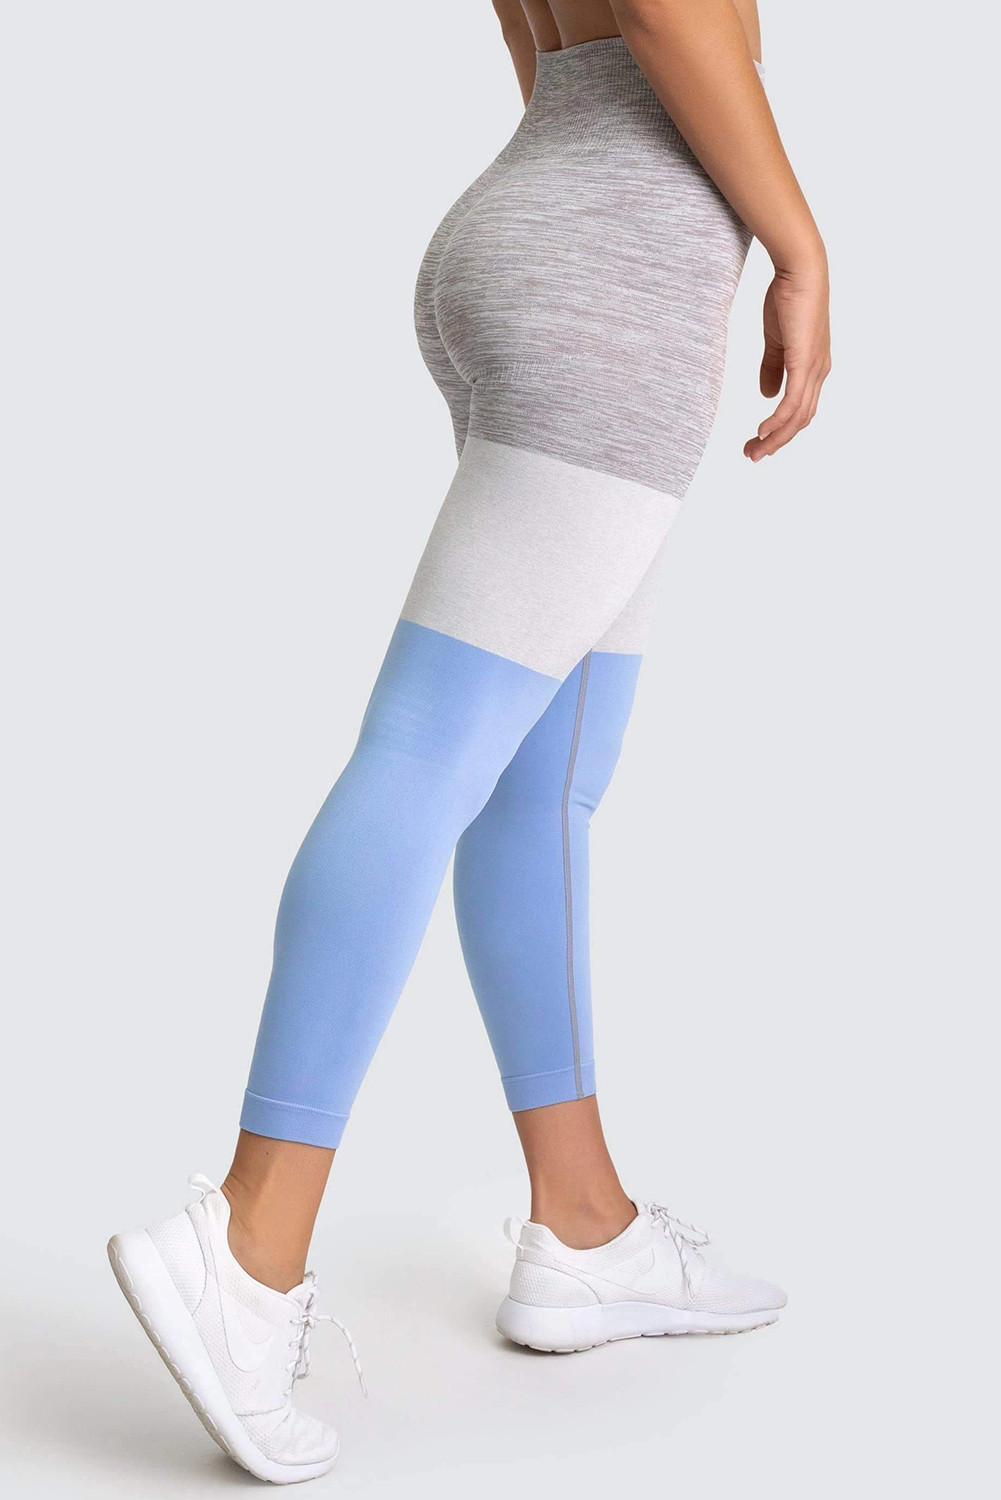  HIGHDAYS High Waisted Yoga Pants for Women - Soft